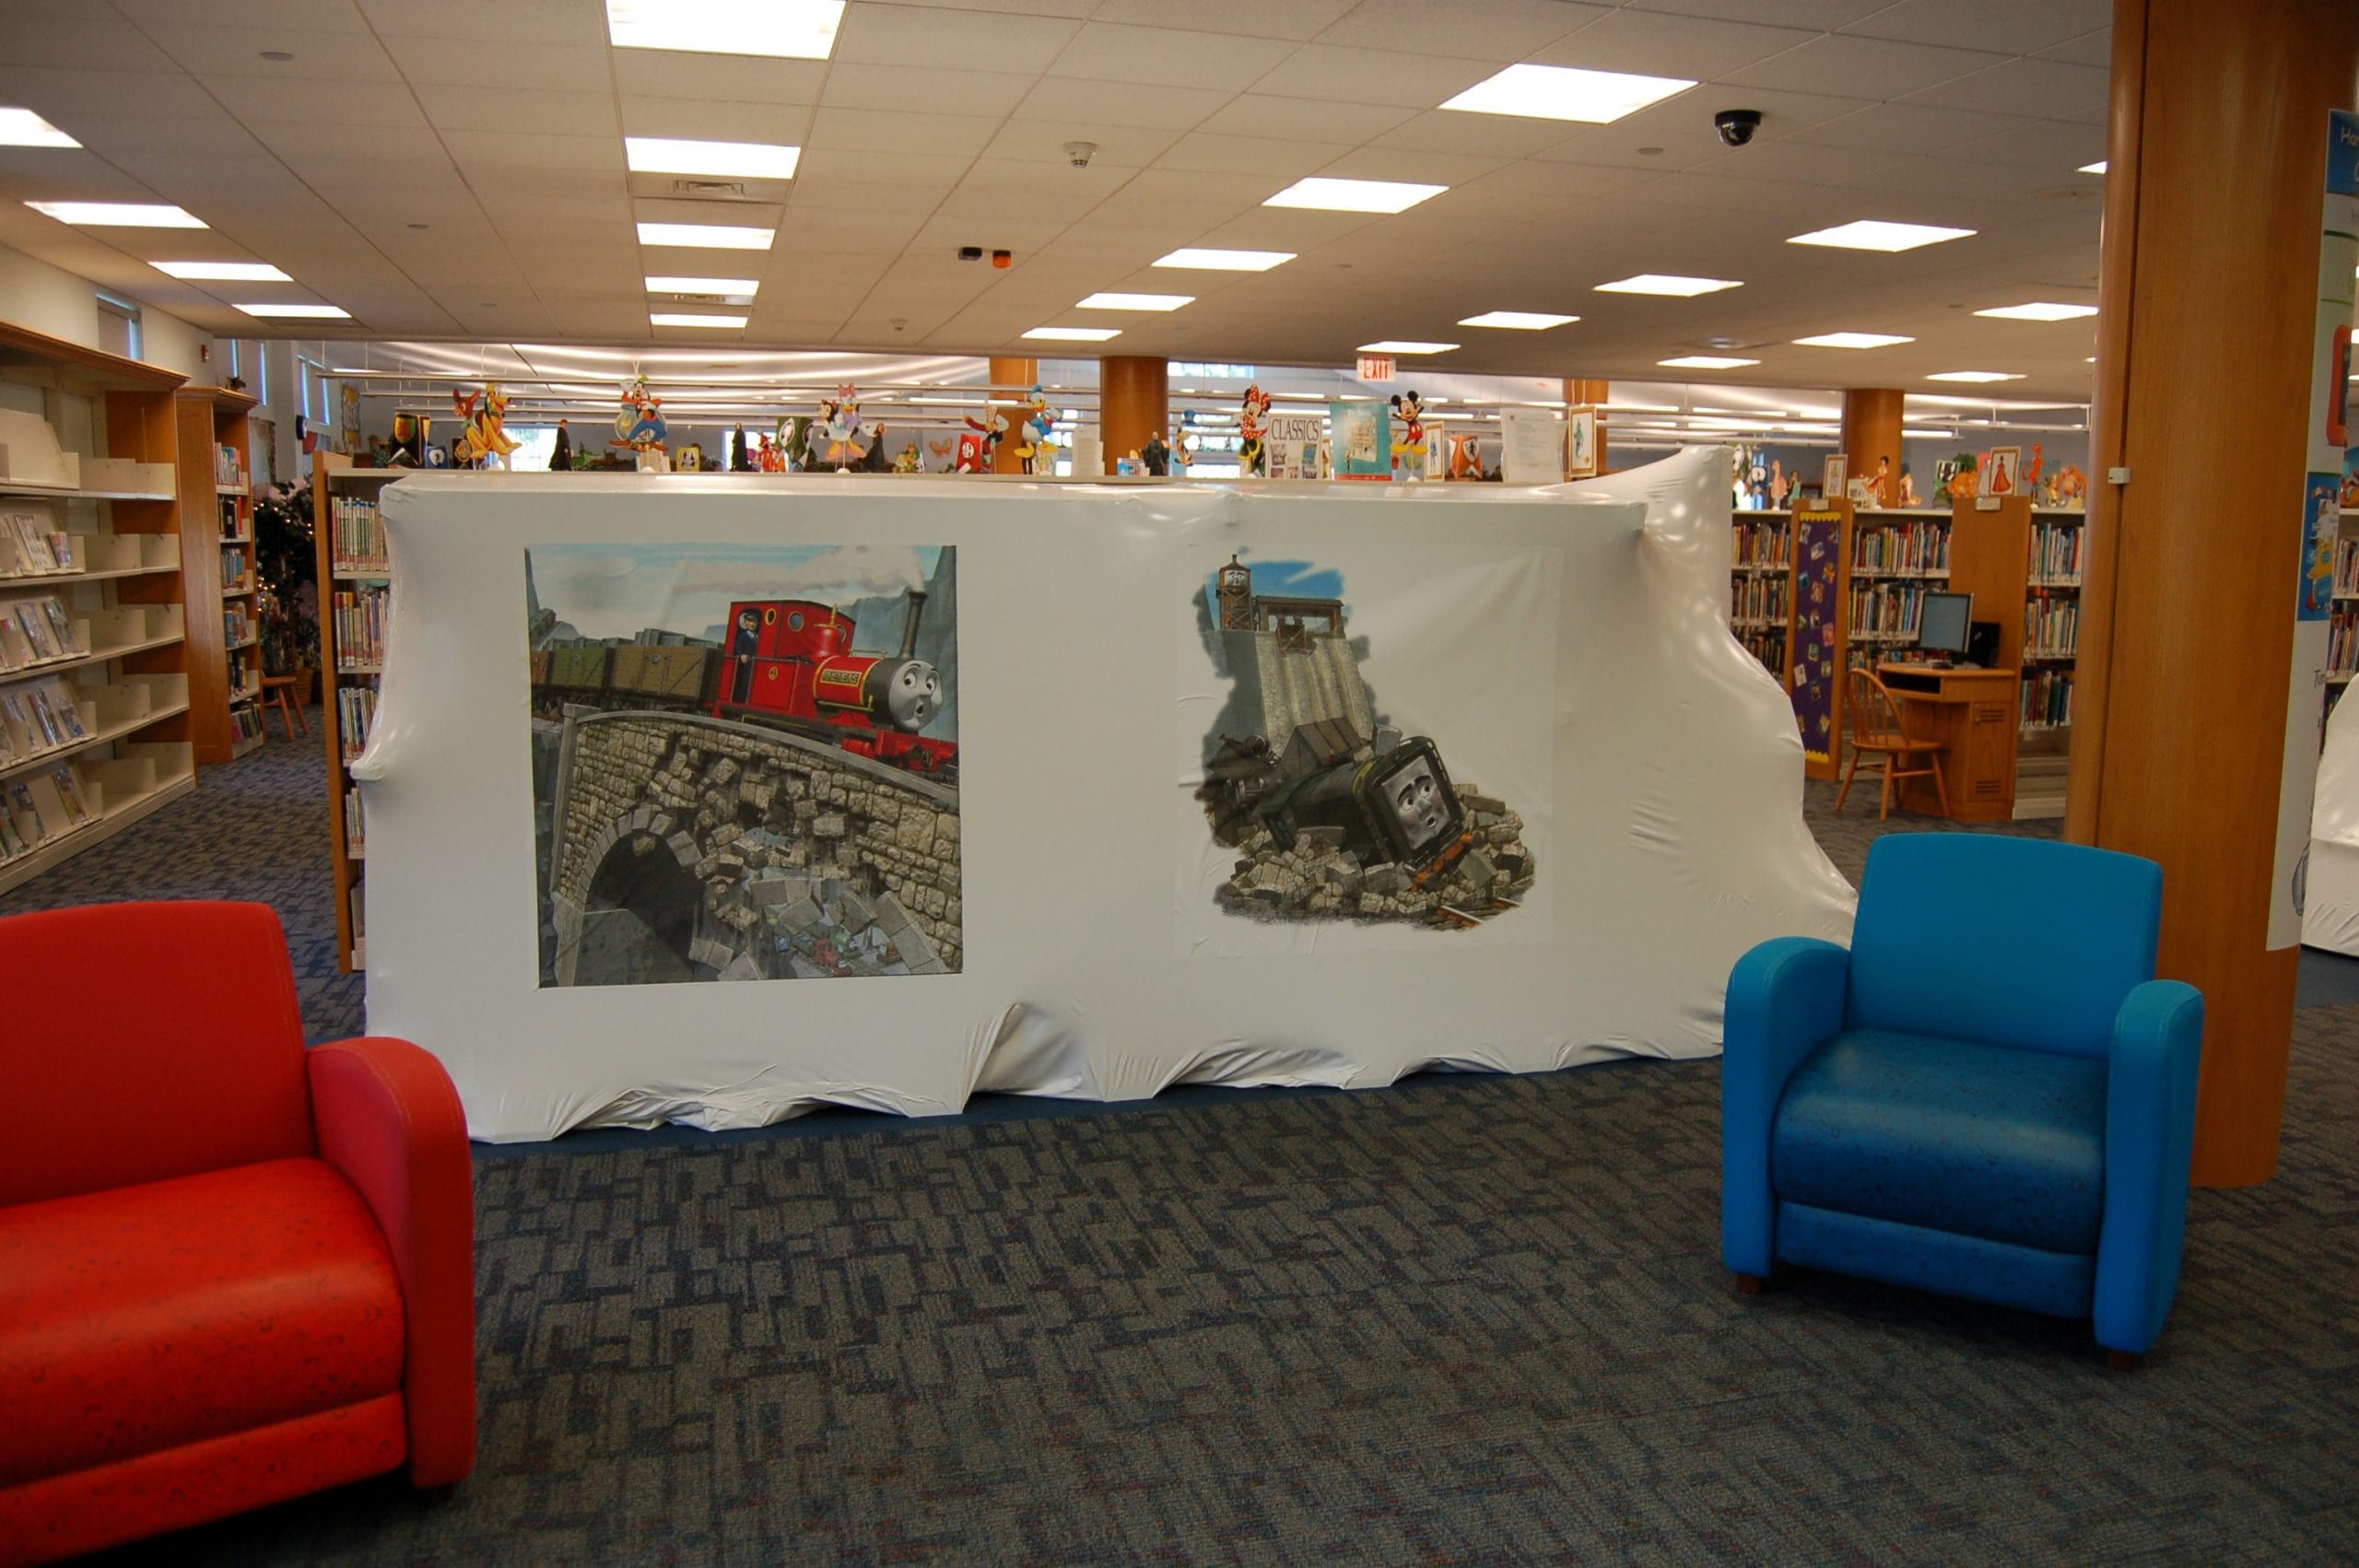 Melting Snowman  Harborfields Public Library